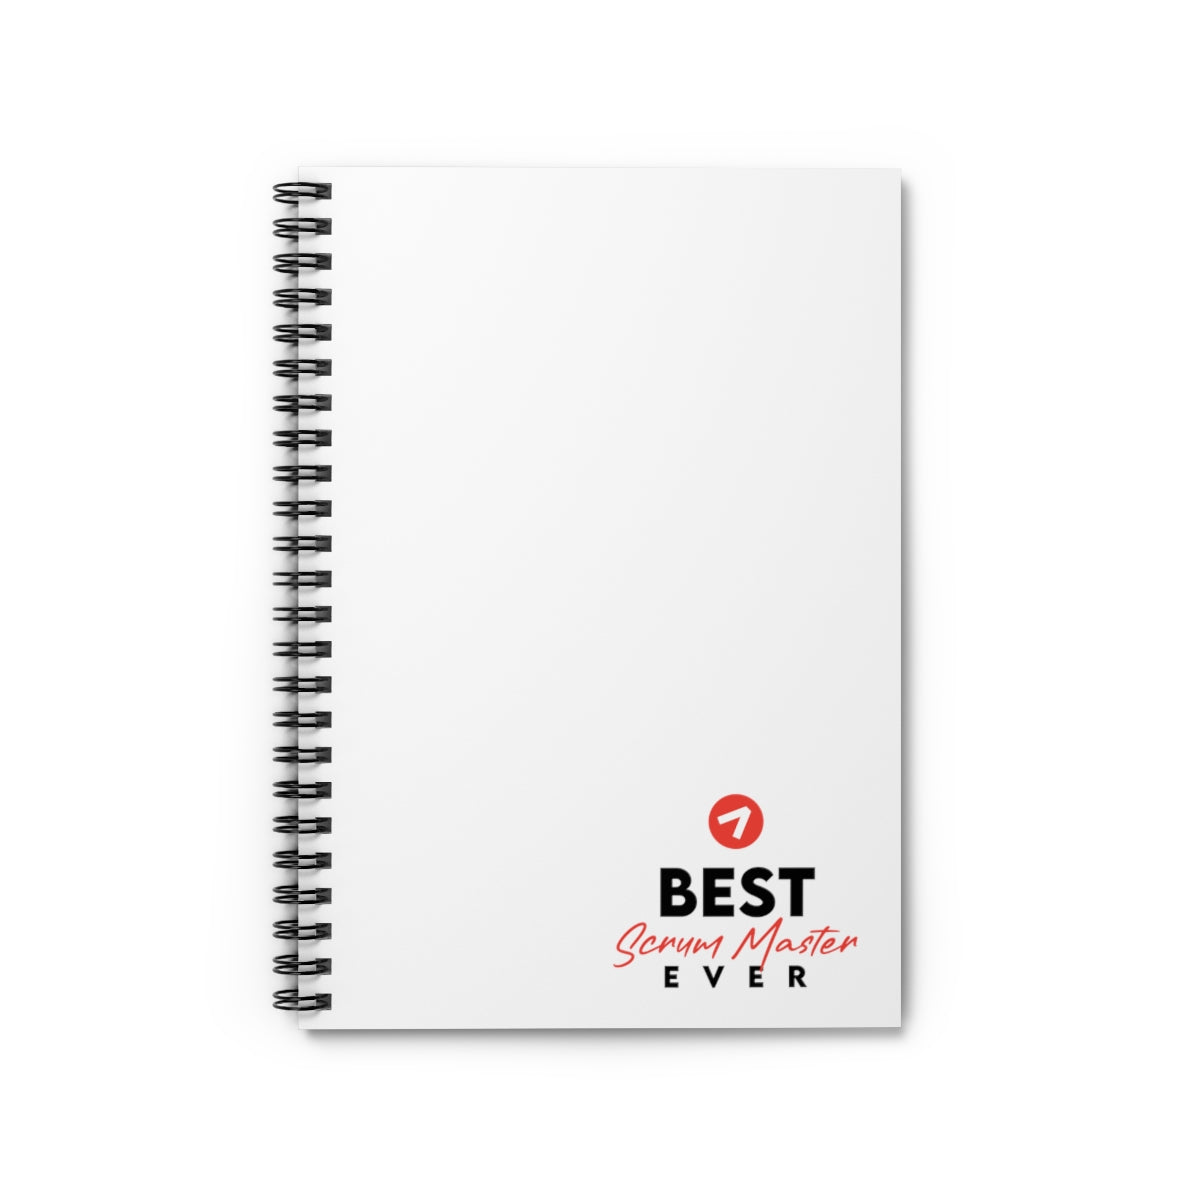 Best Scrum Master ever - Red - Spiral Notebook - Ruled Line